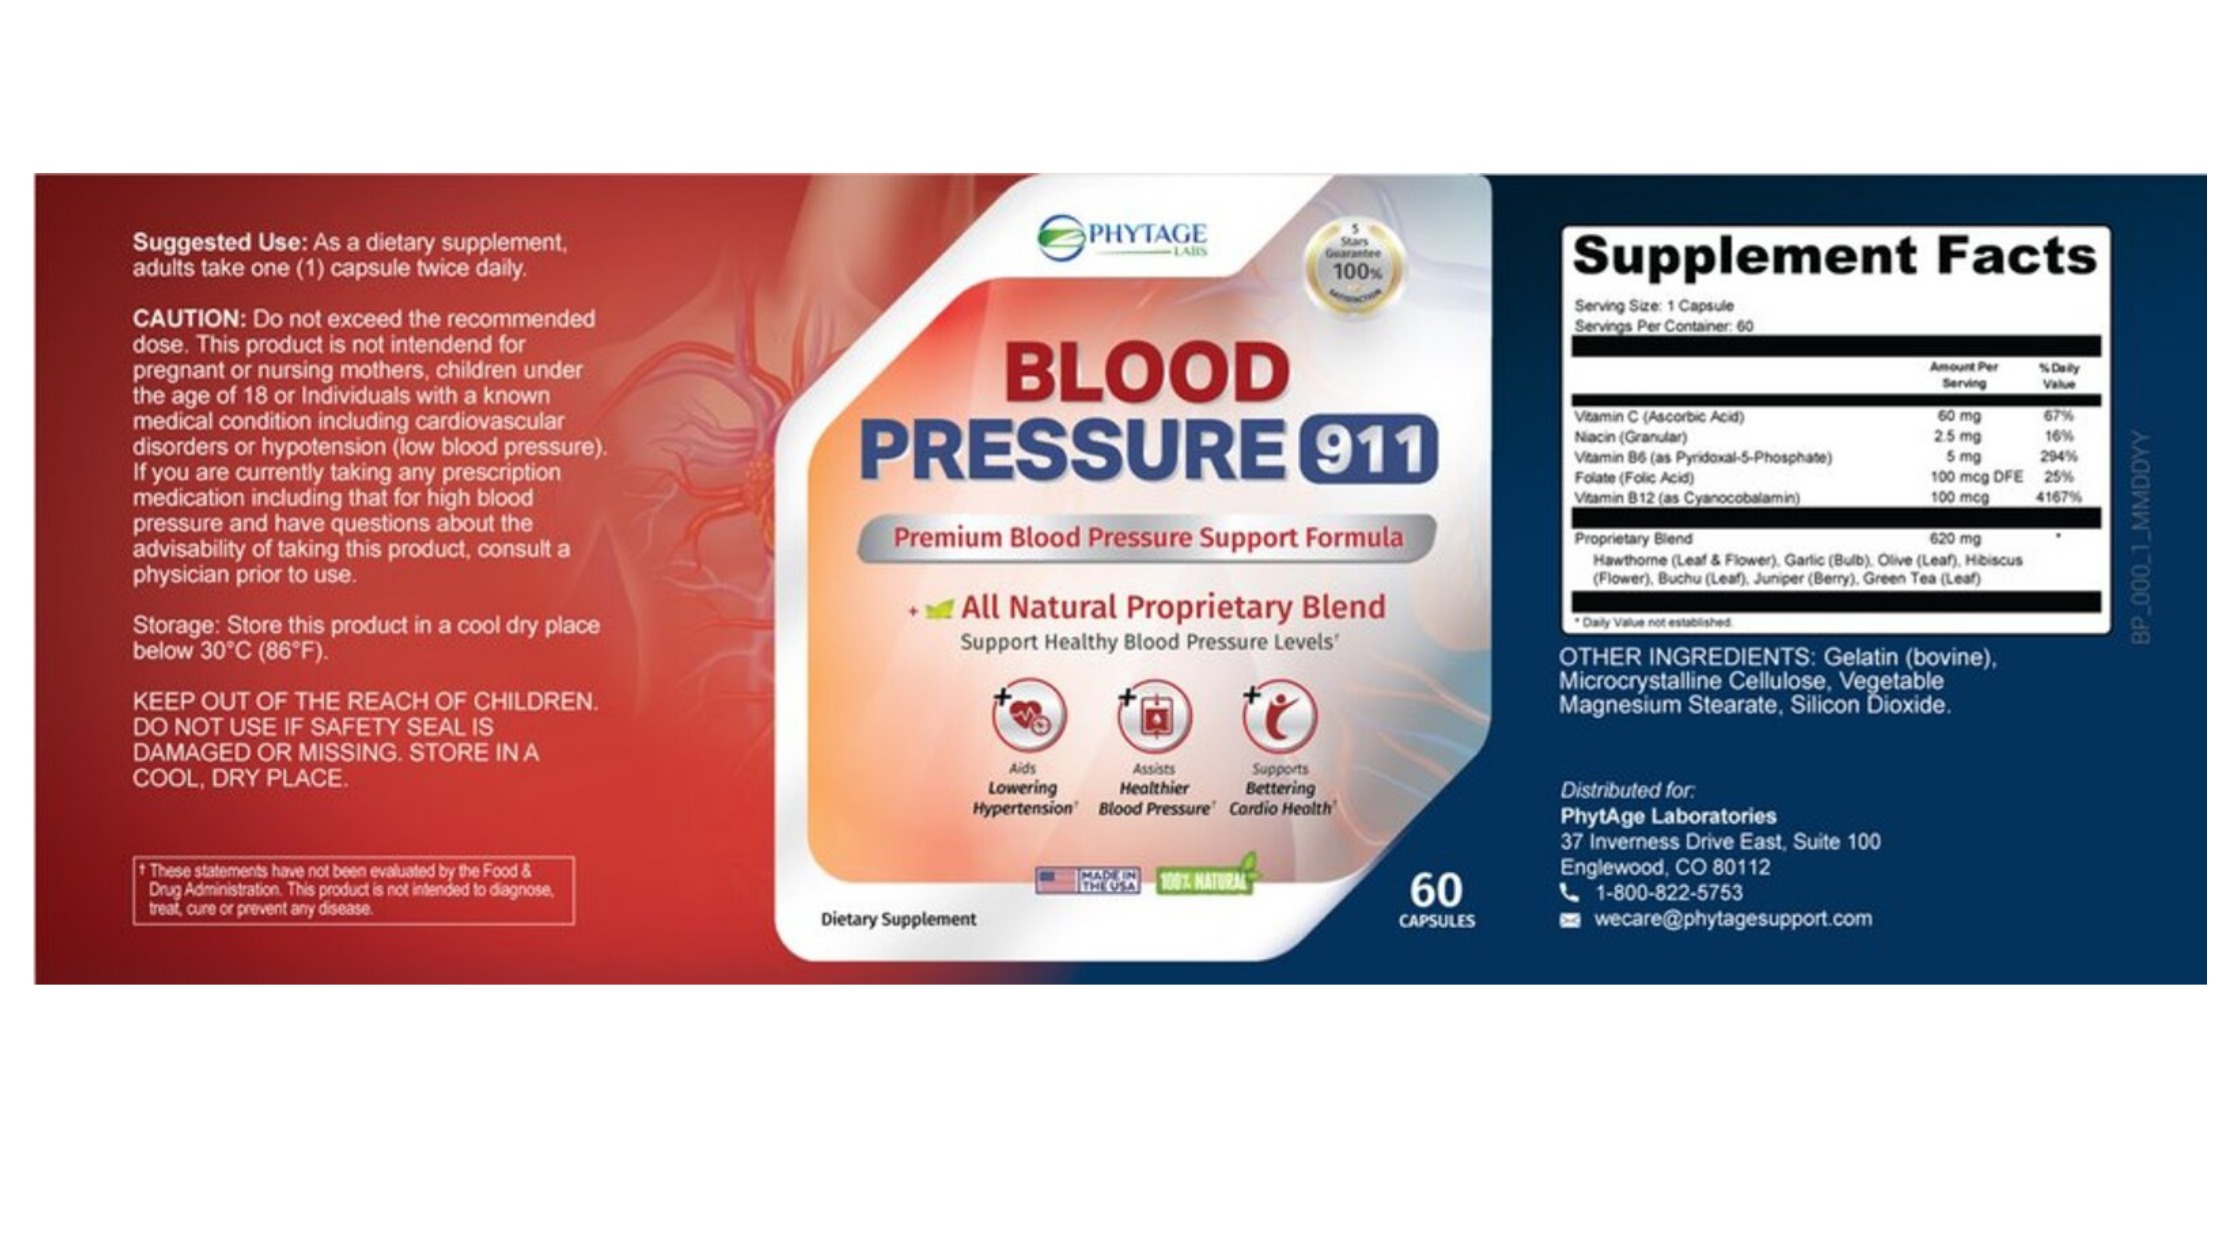 Blood Pressure 911 Dosage & Usage